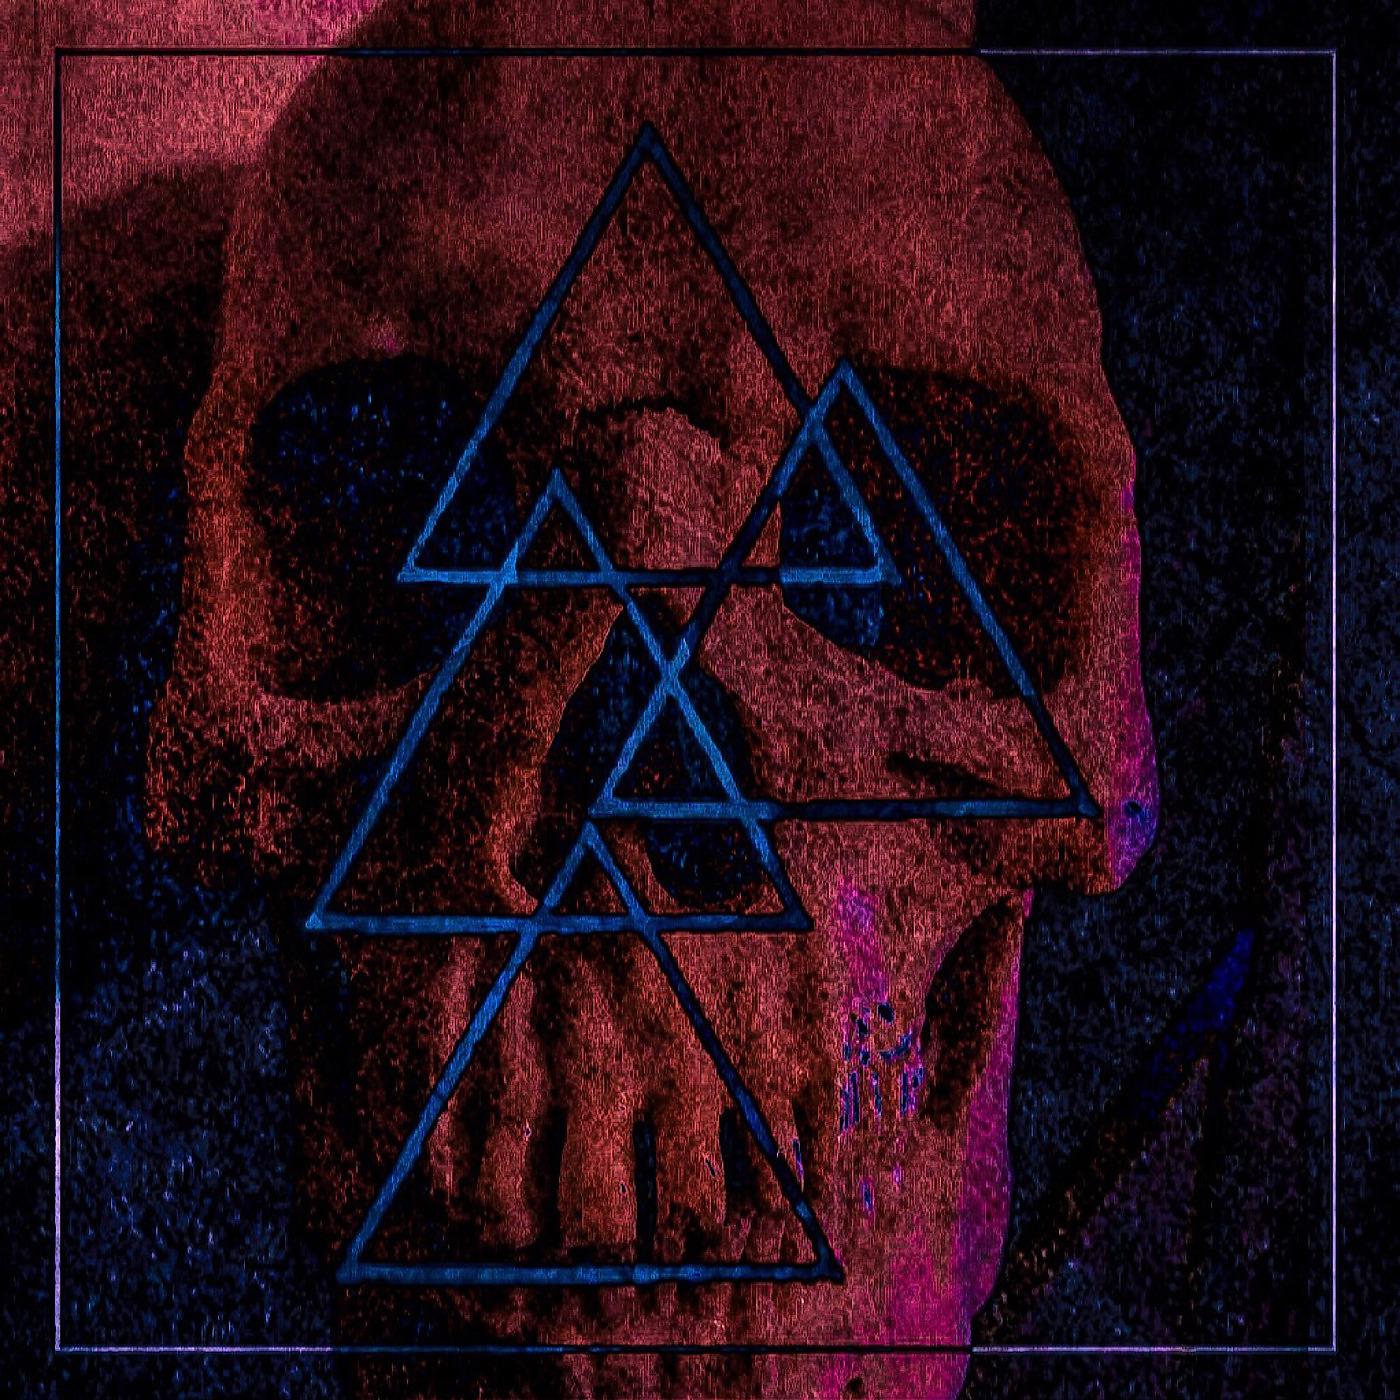 Постер альбома Doctor Death